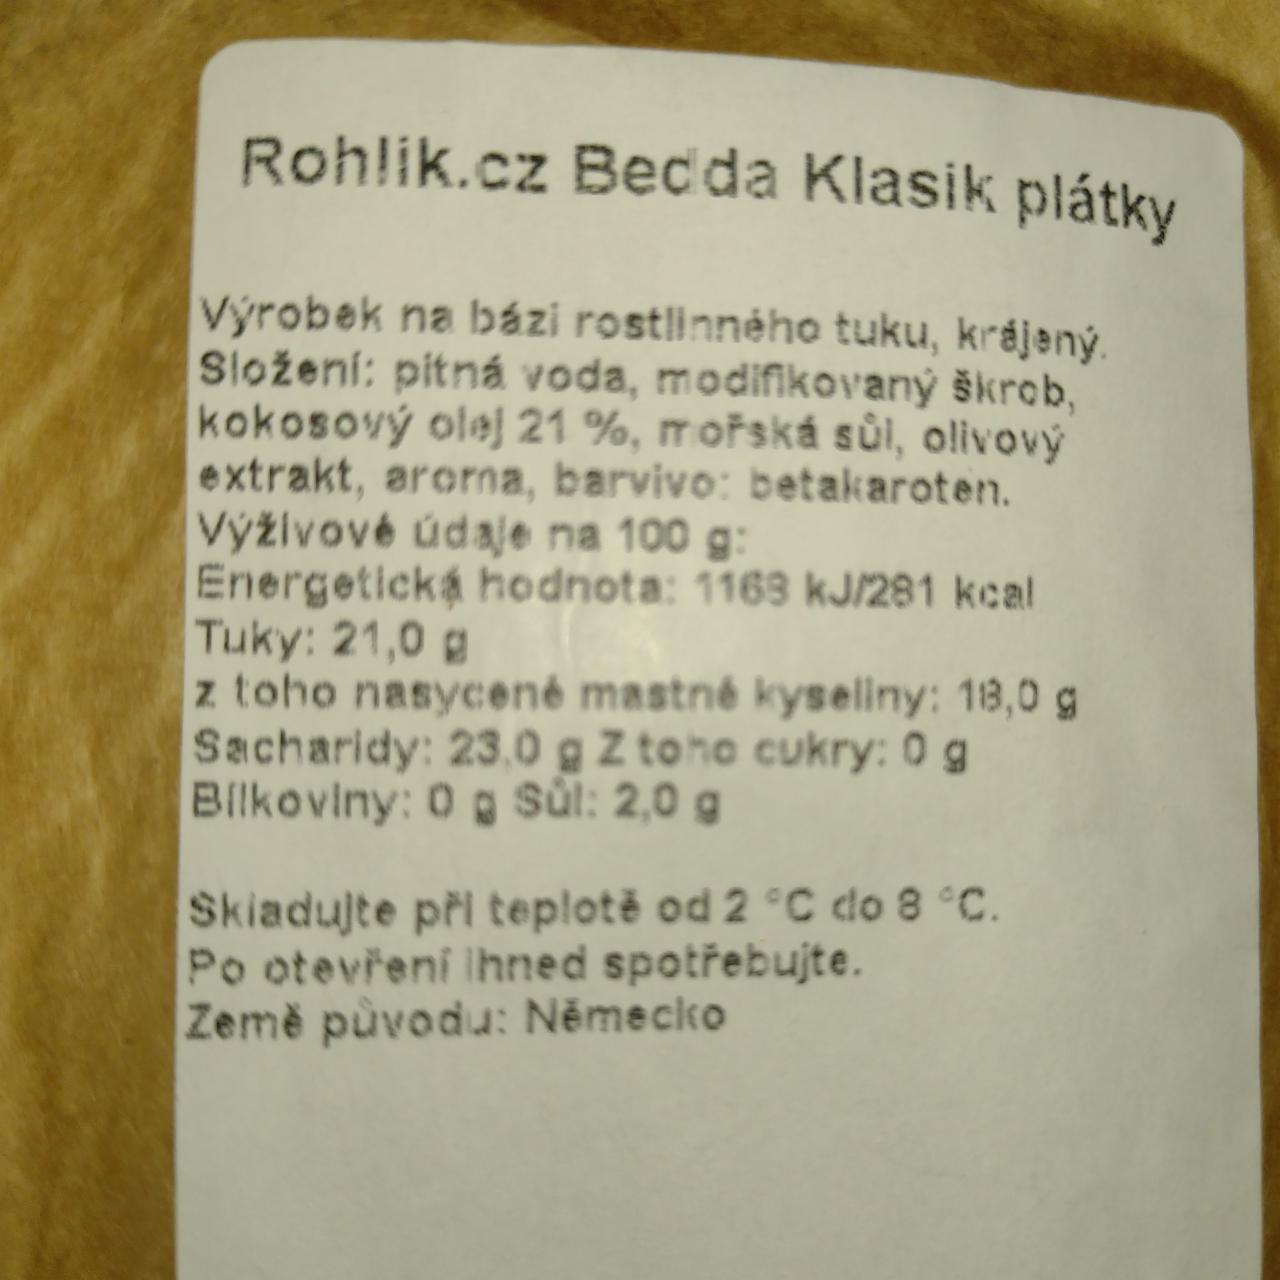 Fotografie - Bedda Klasik plátky Rohlik.cz